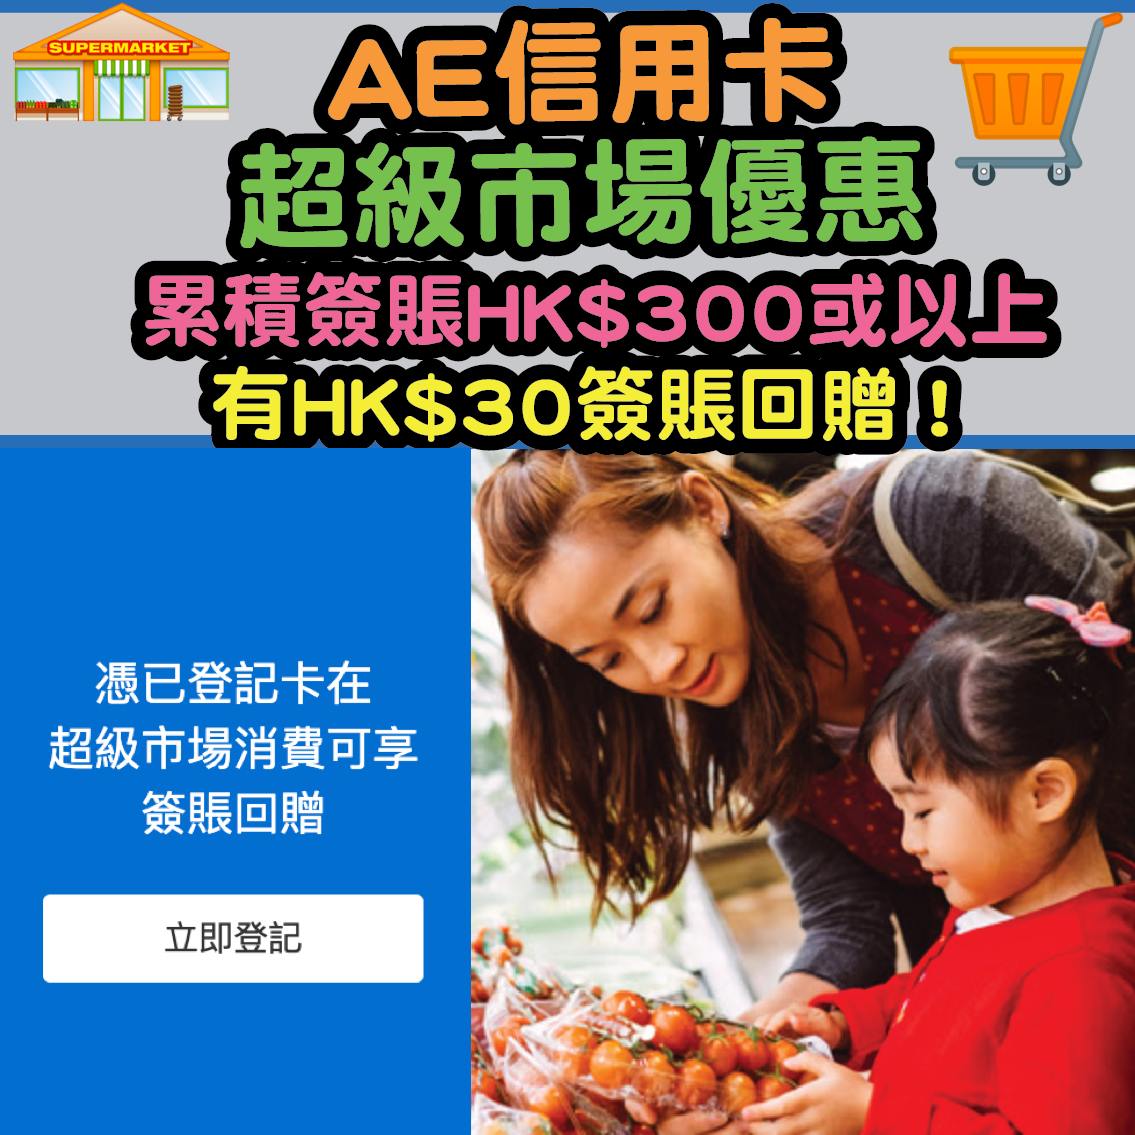 AE信用卡超級市場優惠